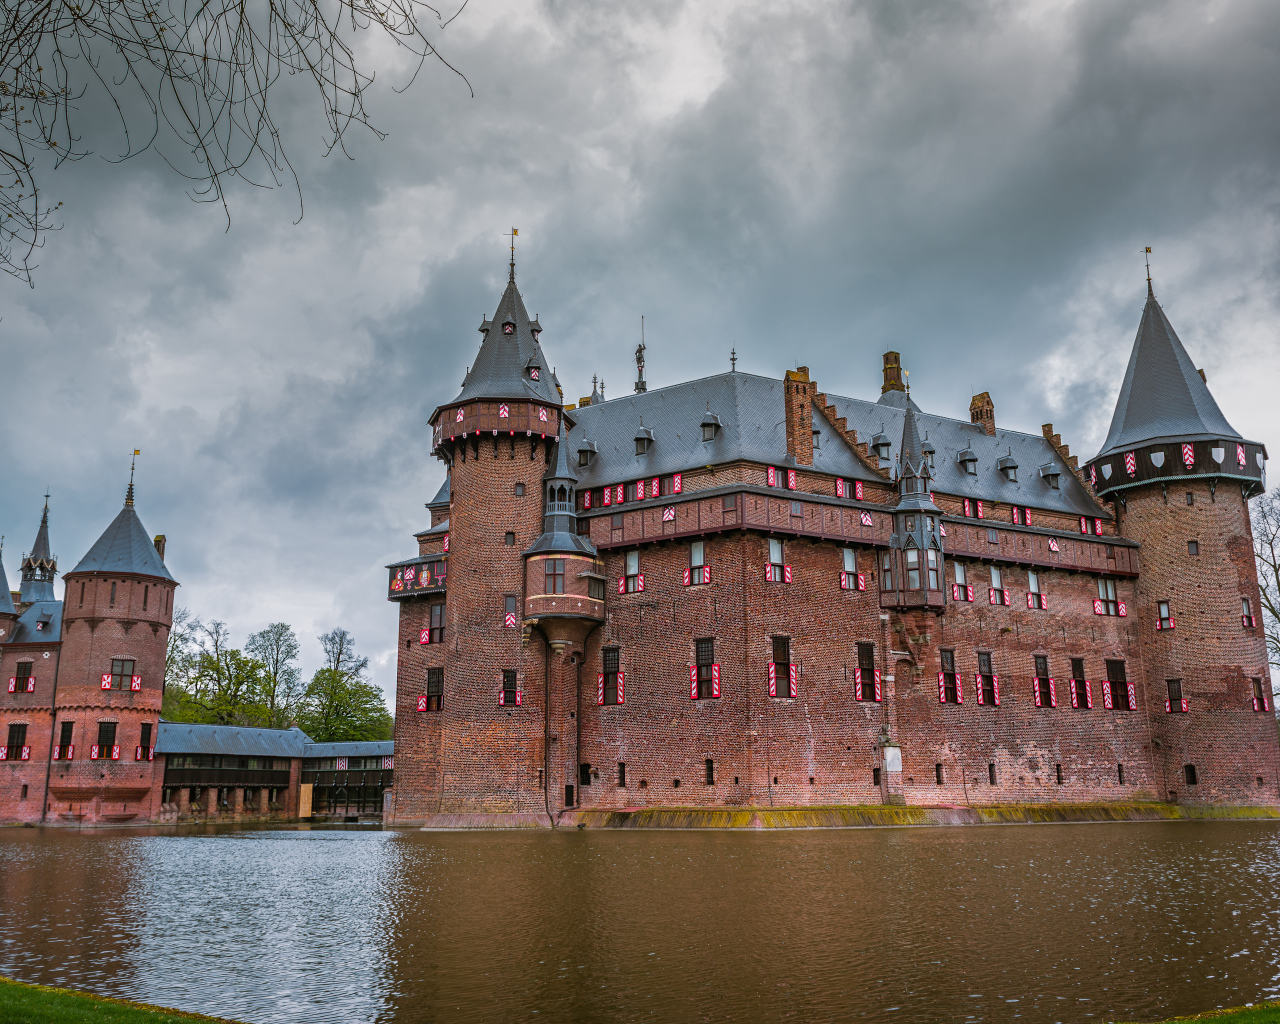 Пасмурное небо над замком Де-Хаар, Нидерланды